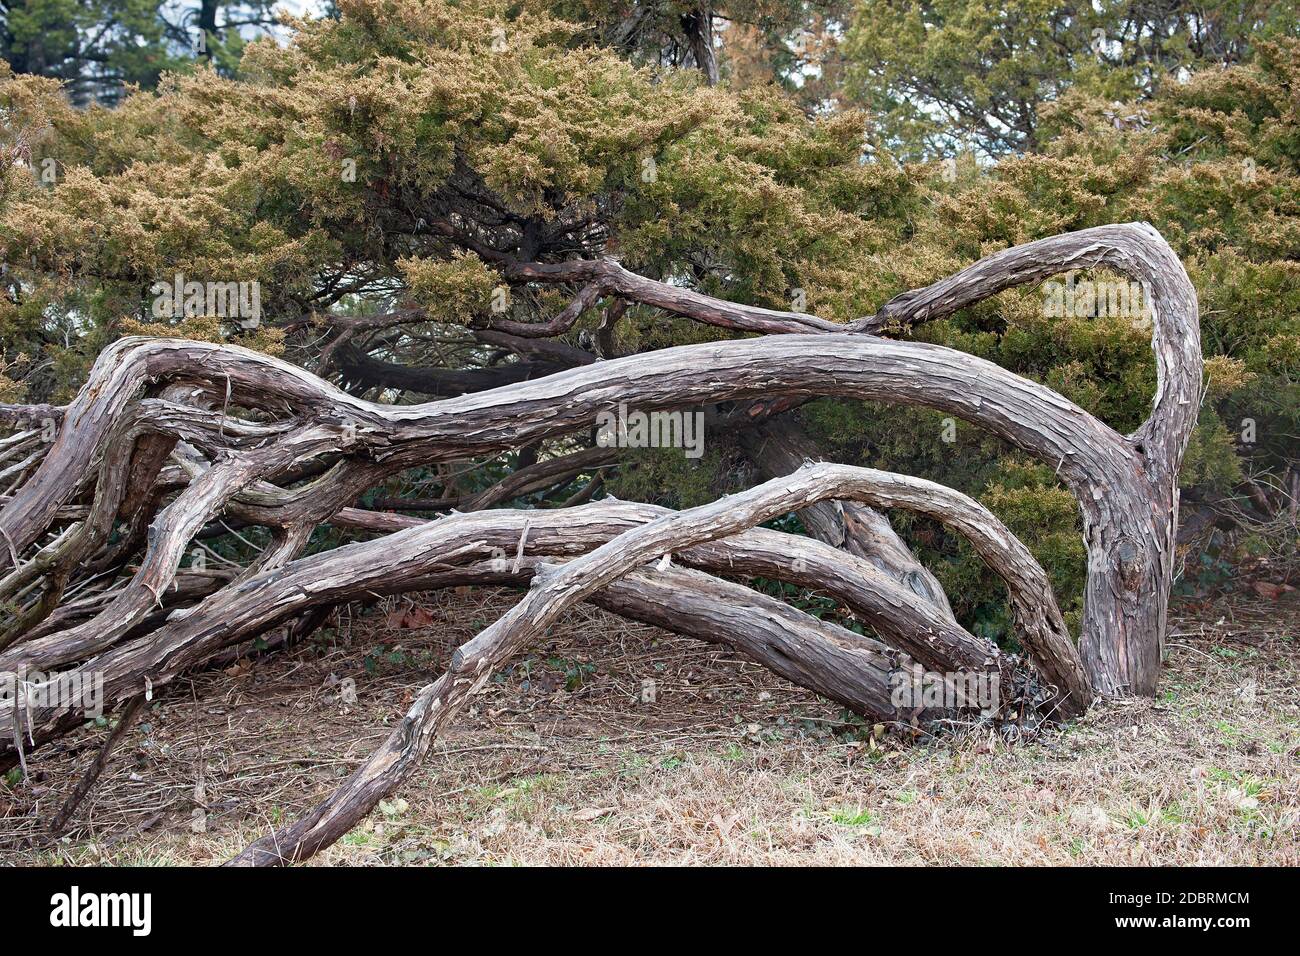 Savin juniper (Juniperus sabina). Called Savin also Stock Photo